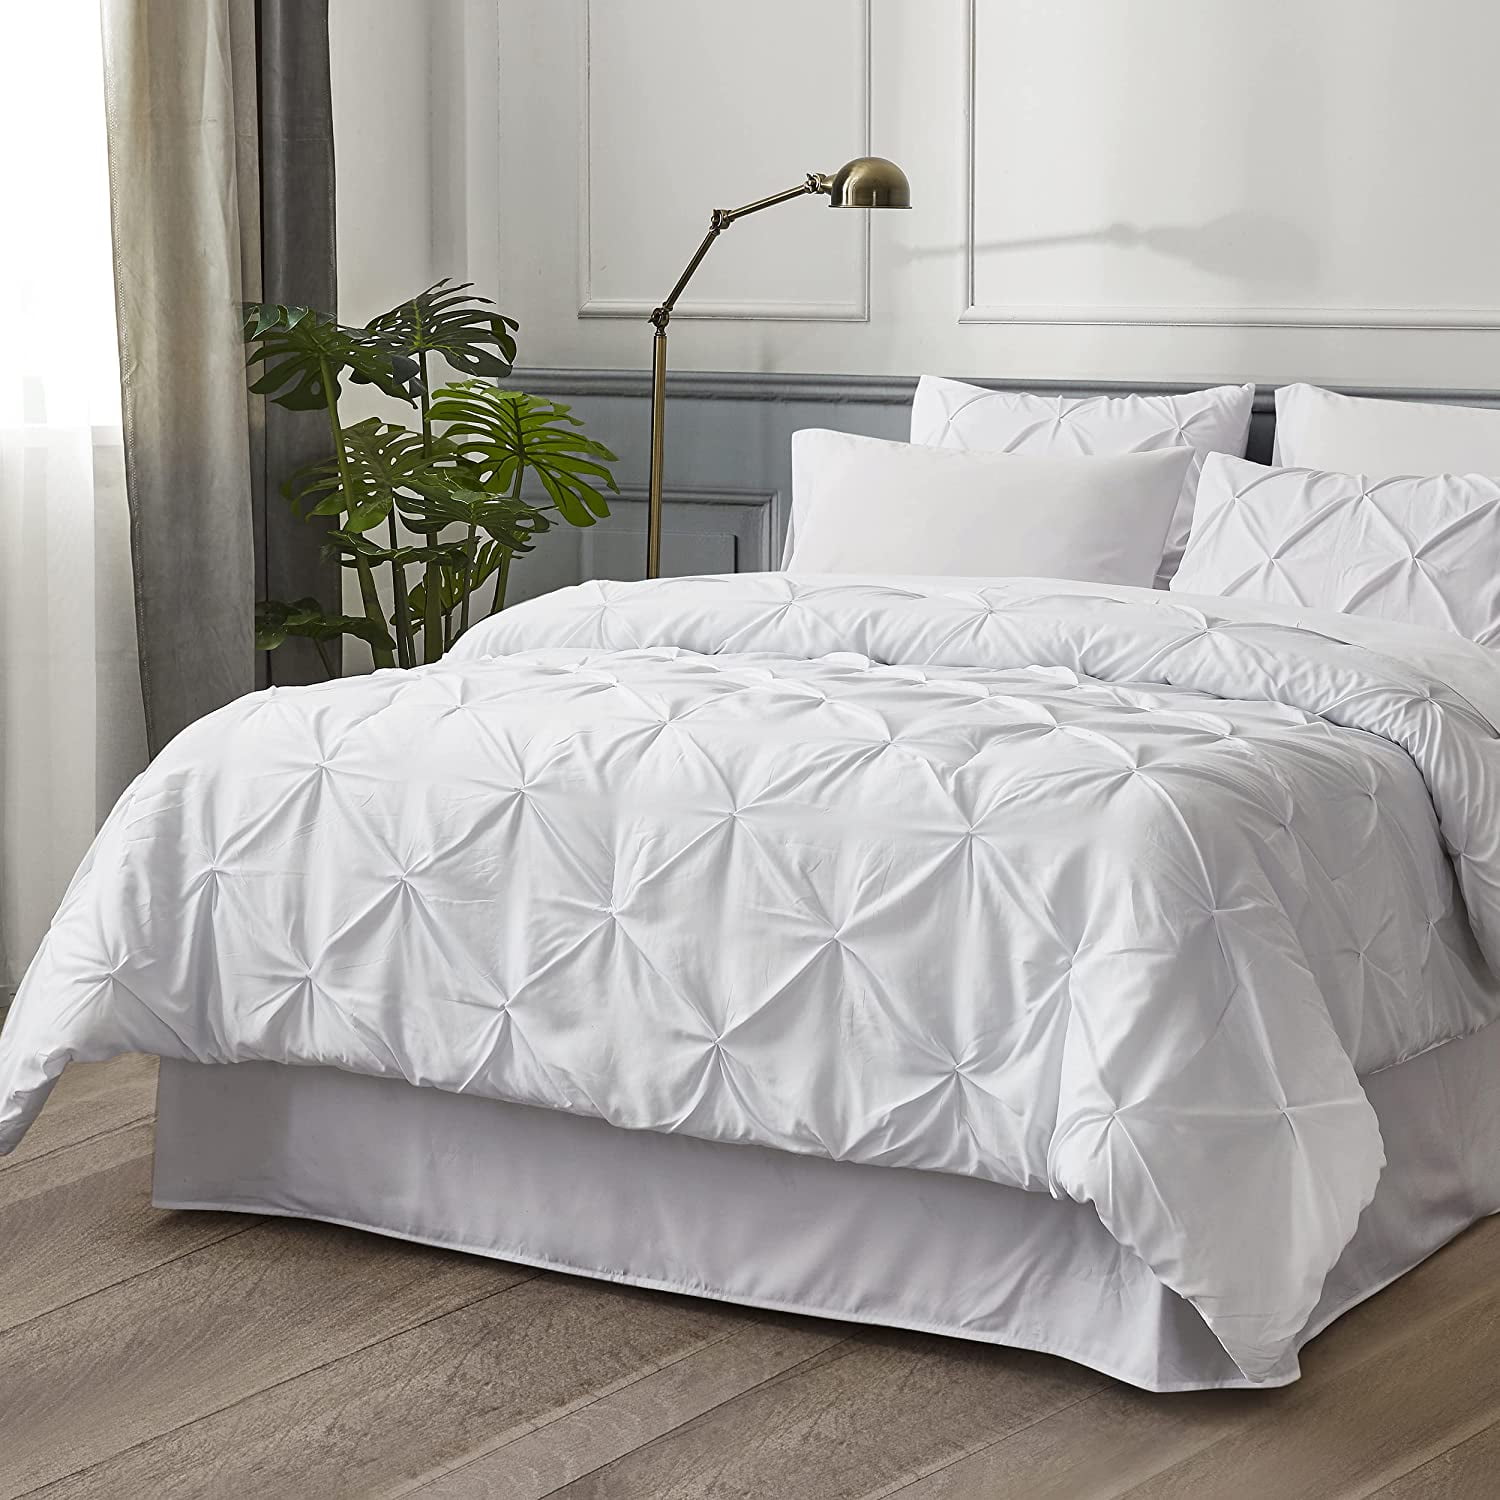 Details about   Bedsure Grey Queen/Full Comforter Set 3 Piece Reversible Percale Stripes Hypoa 